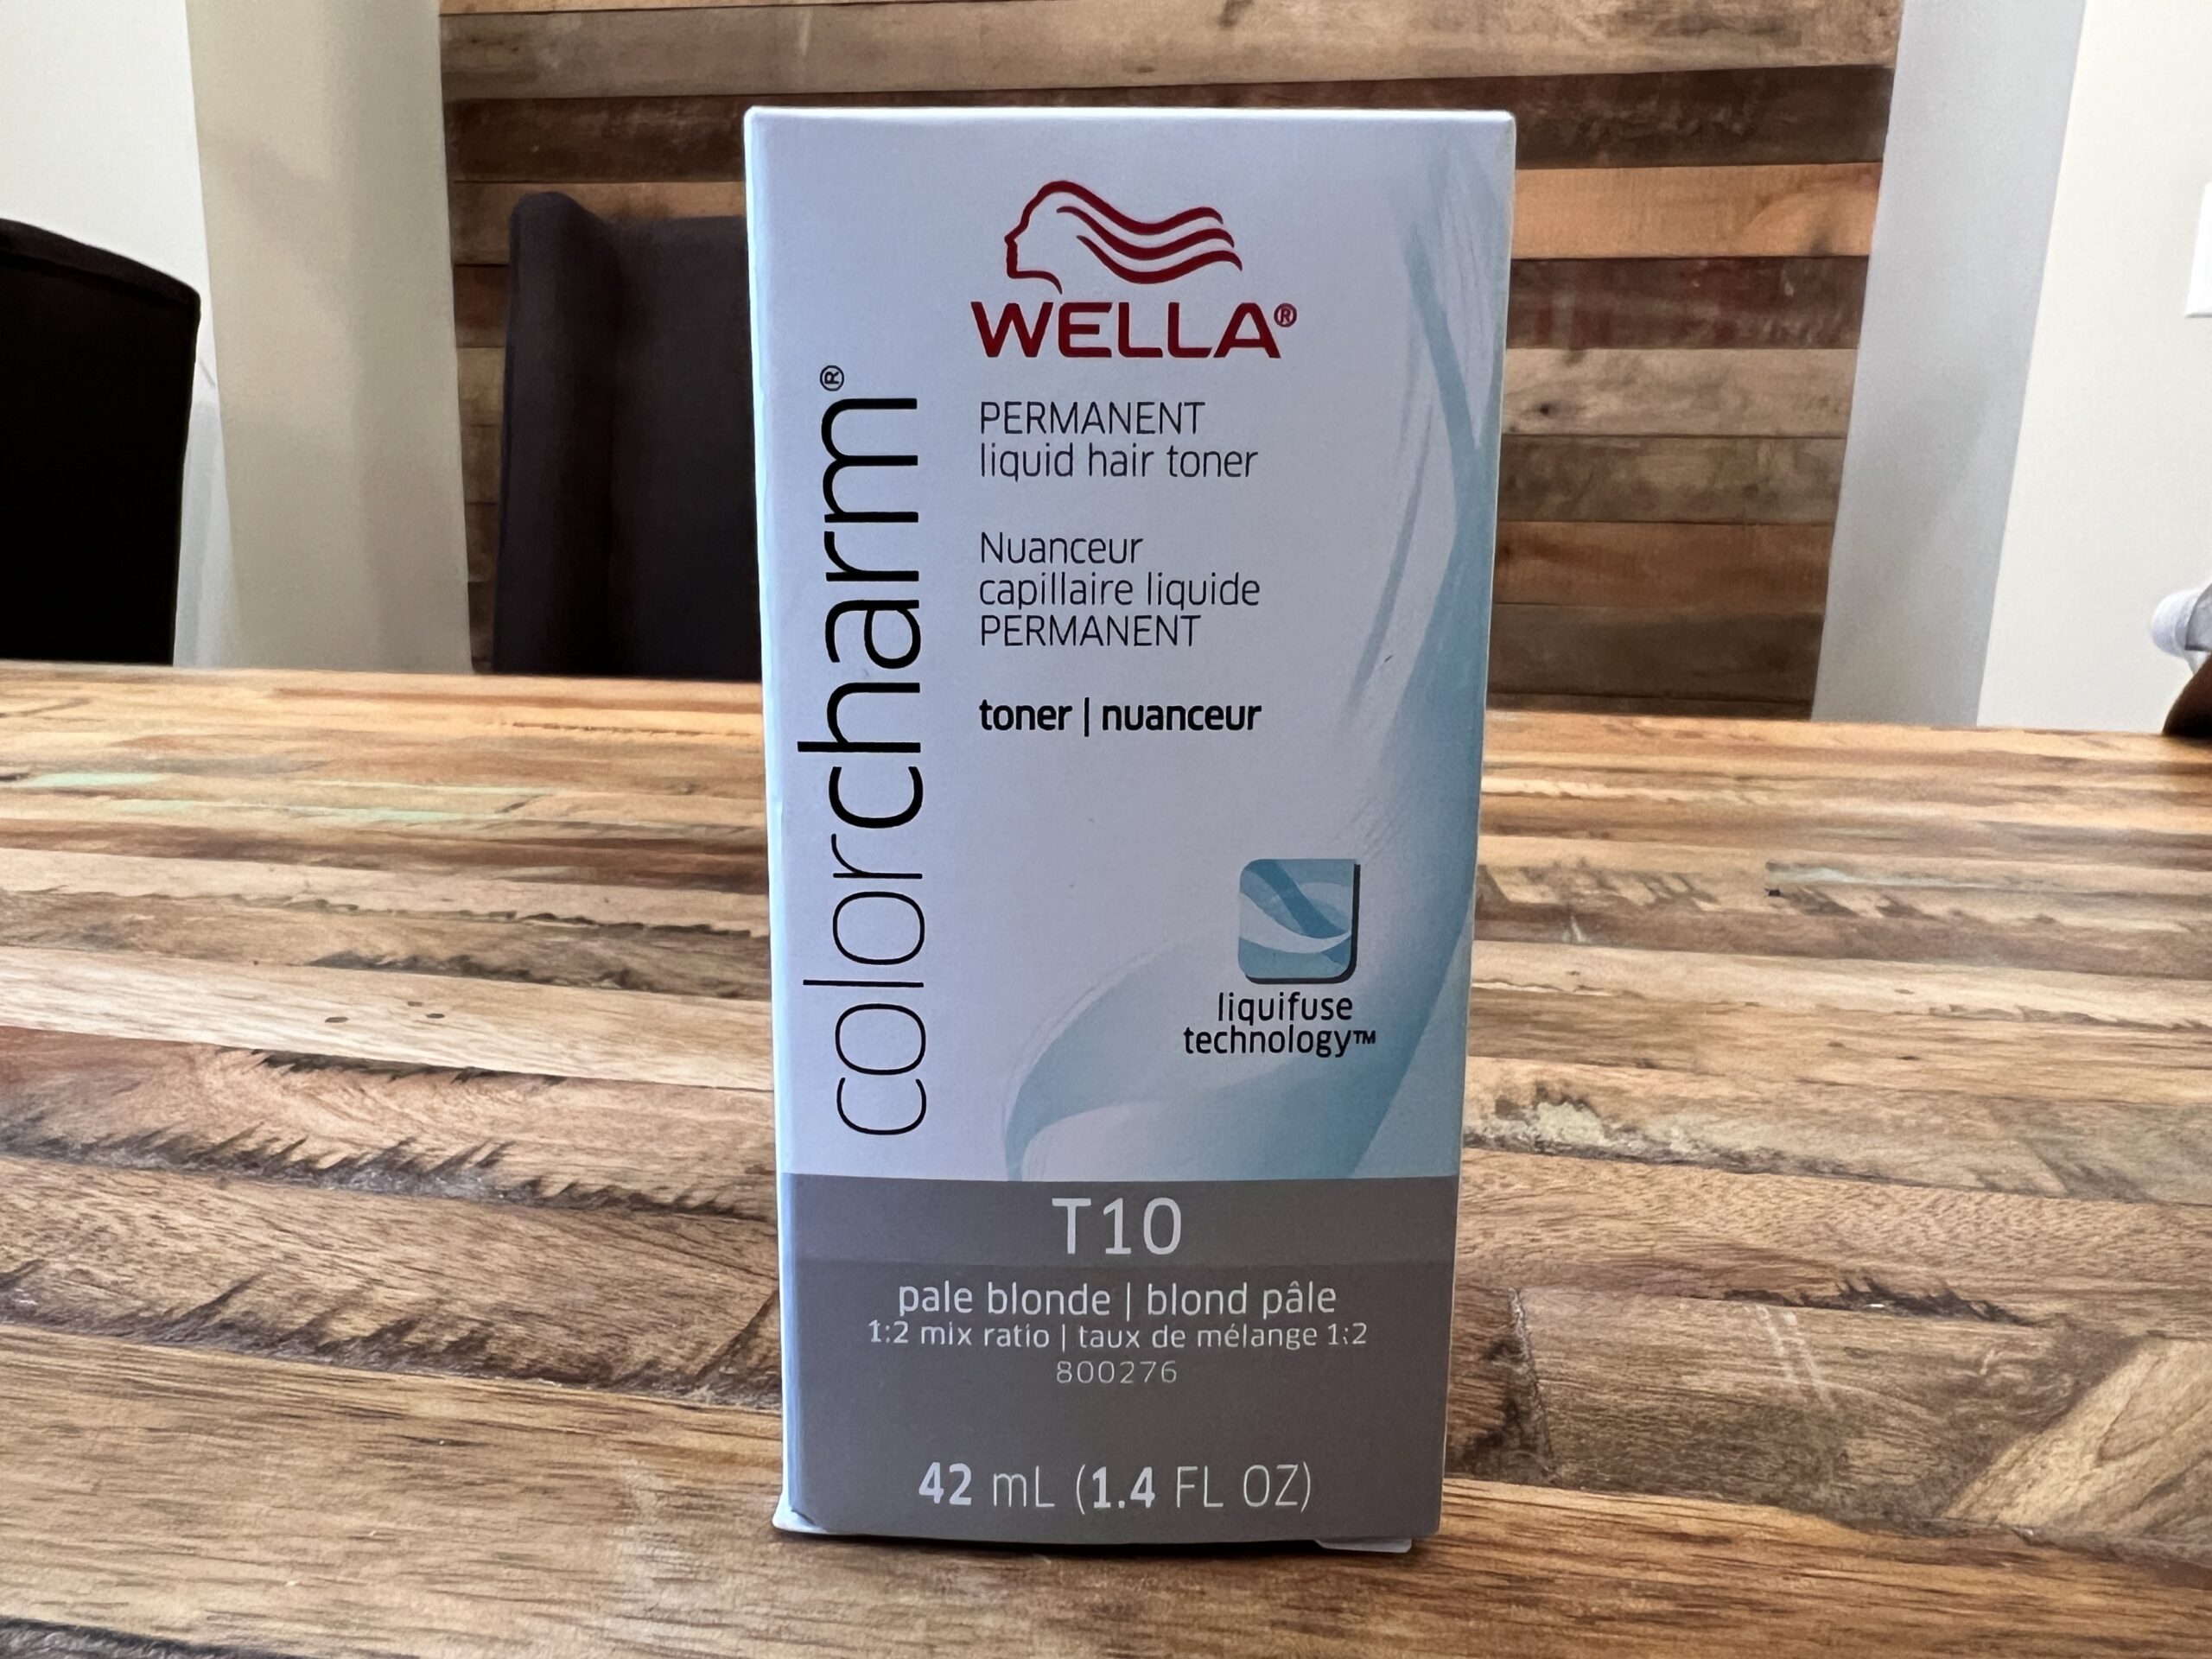 Wella Color Charm T10 Permanent Liquid Hair Toner – Pale Blonde / 1:2 mix ratio / 42mL (1.4 FL OZ)